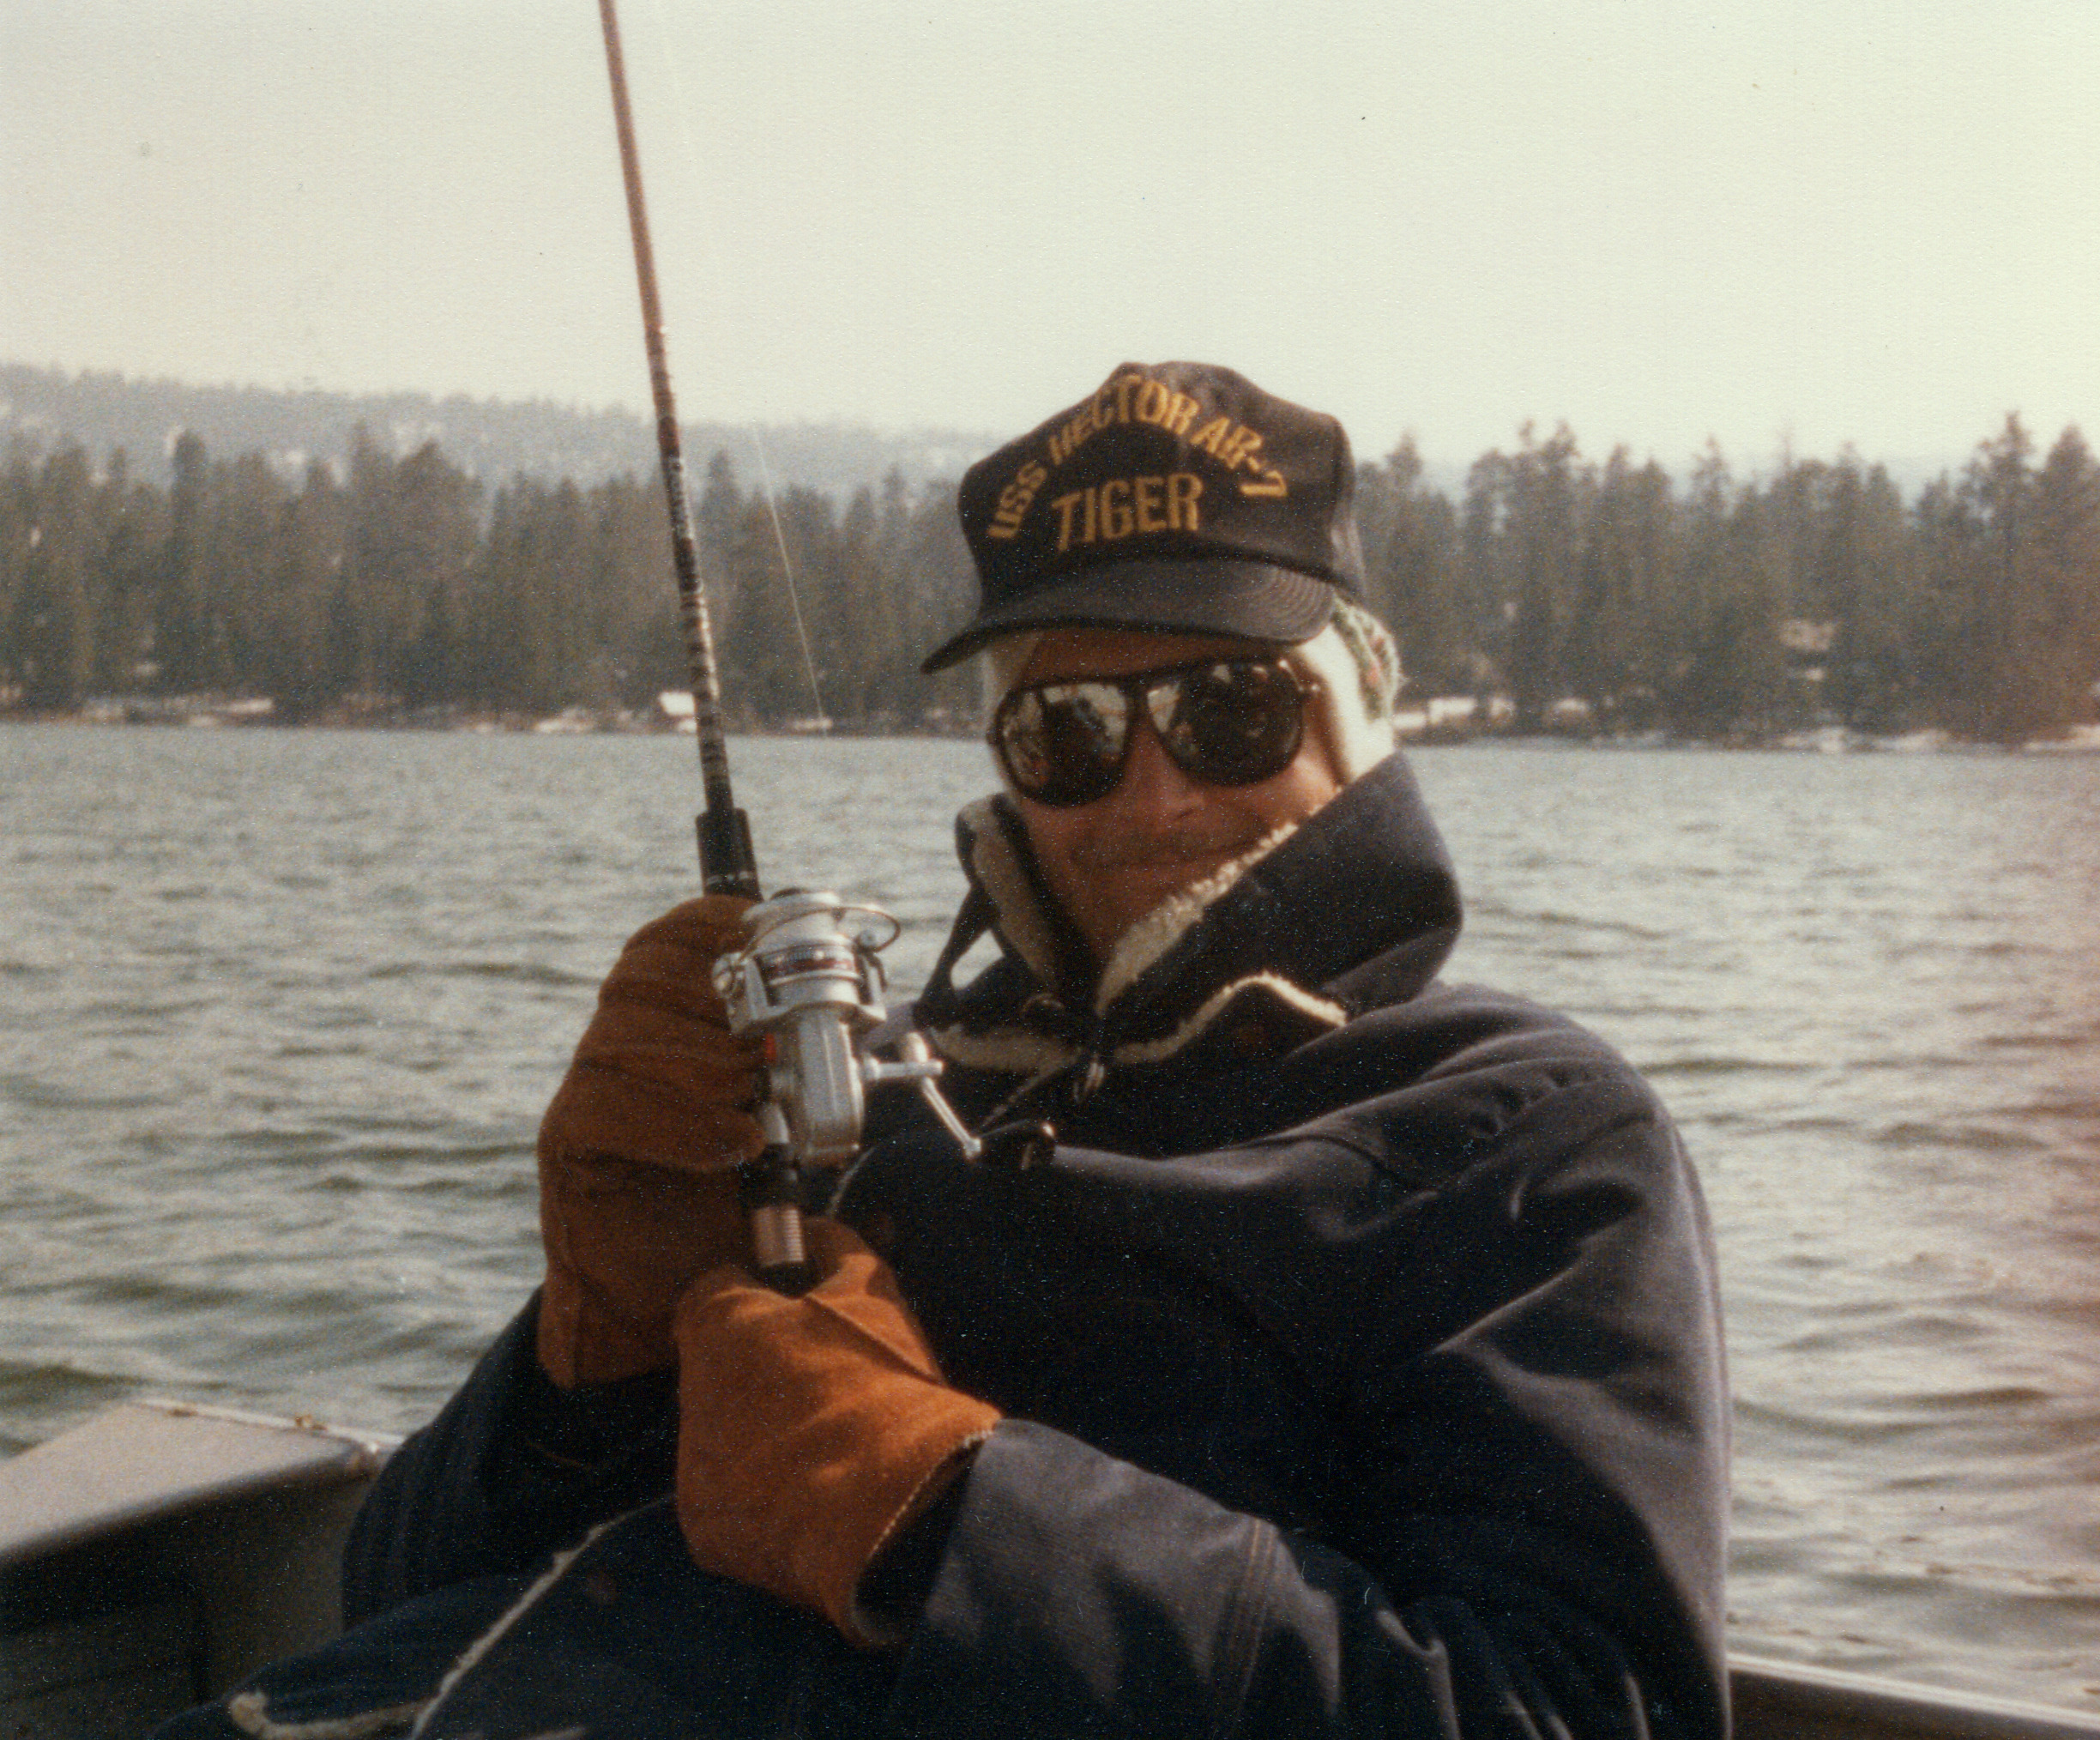 Mark Fishing in Big Bear